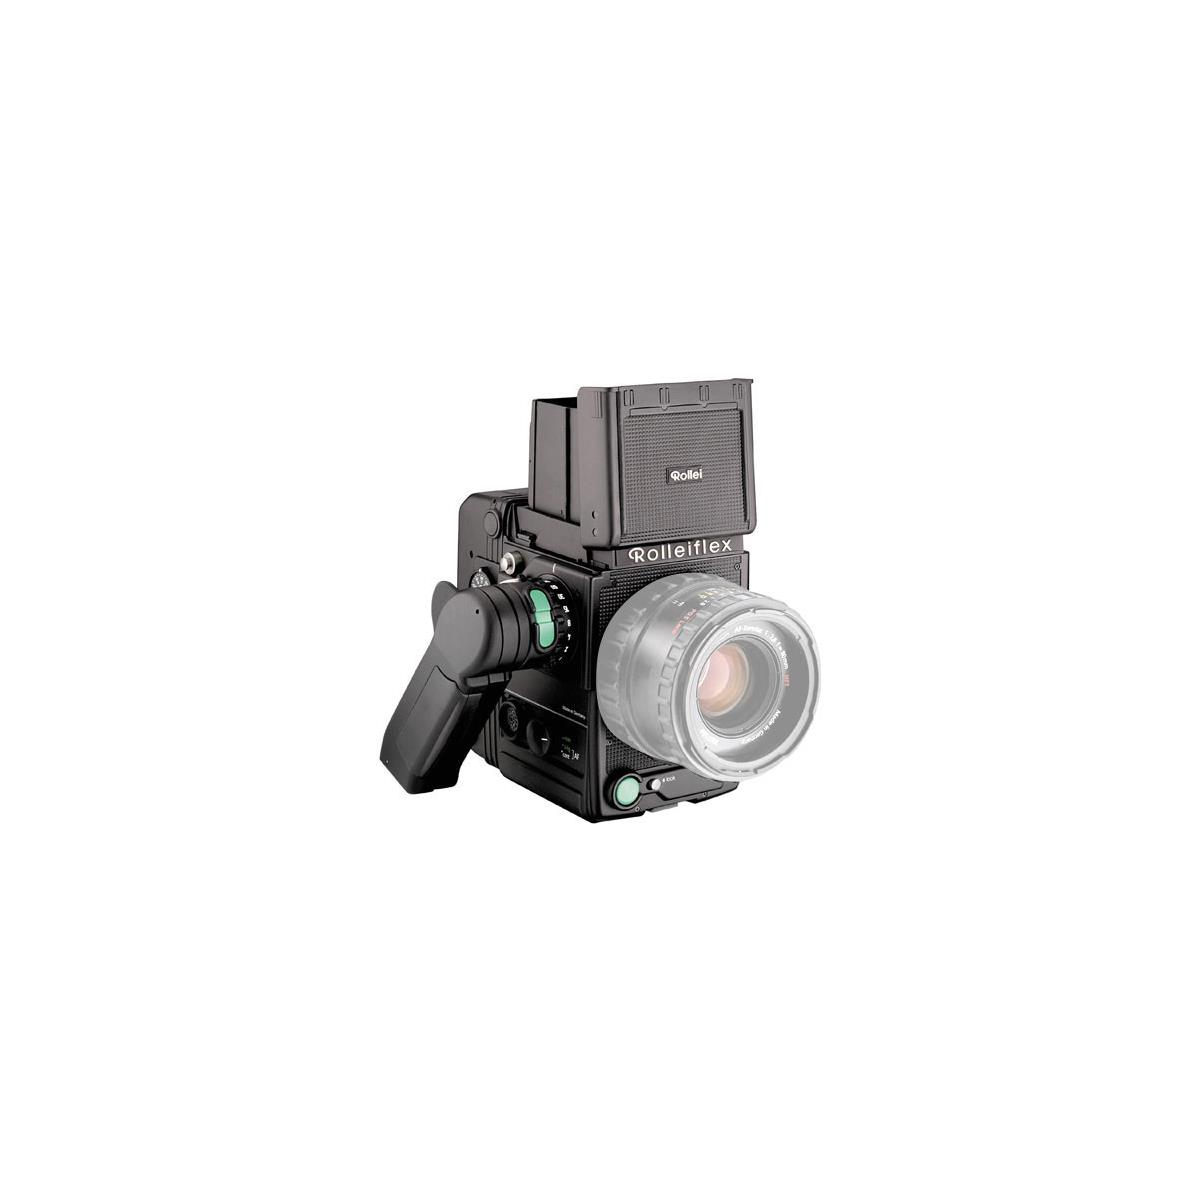 Image of RGBlink Rollei 6008AF Medium Format SLR Auto Focus Camera Body